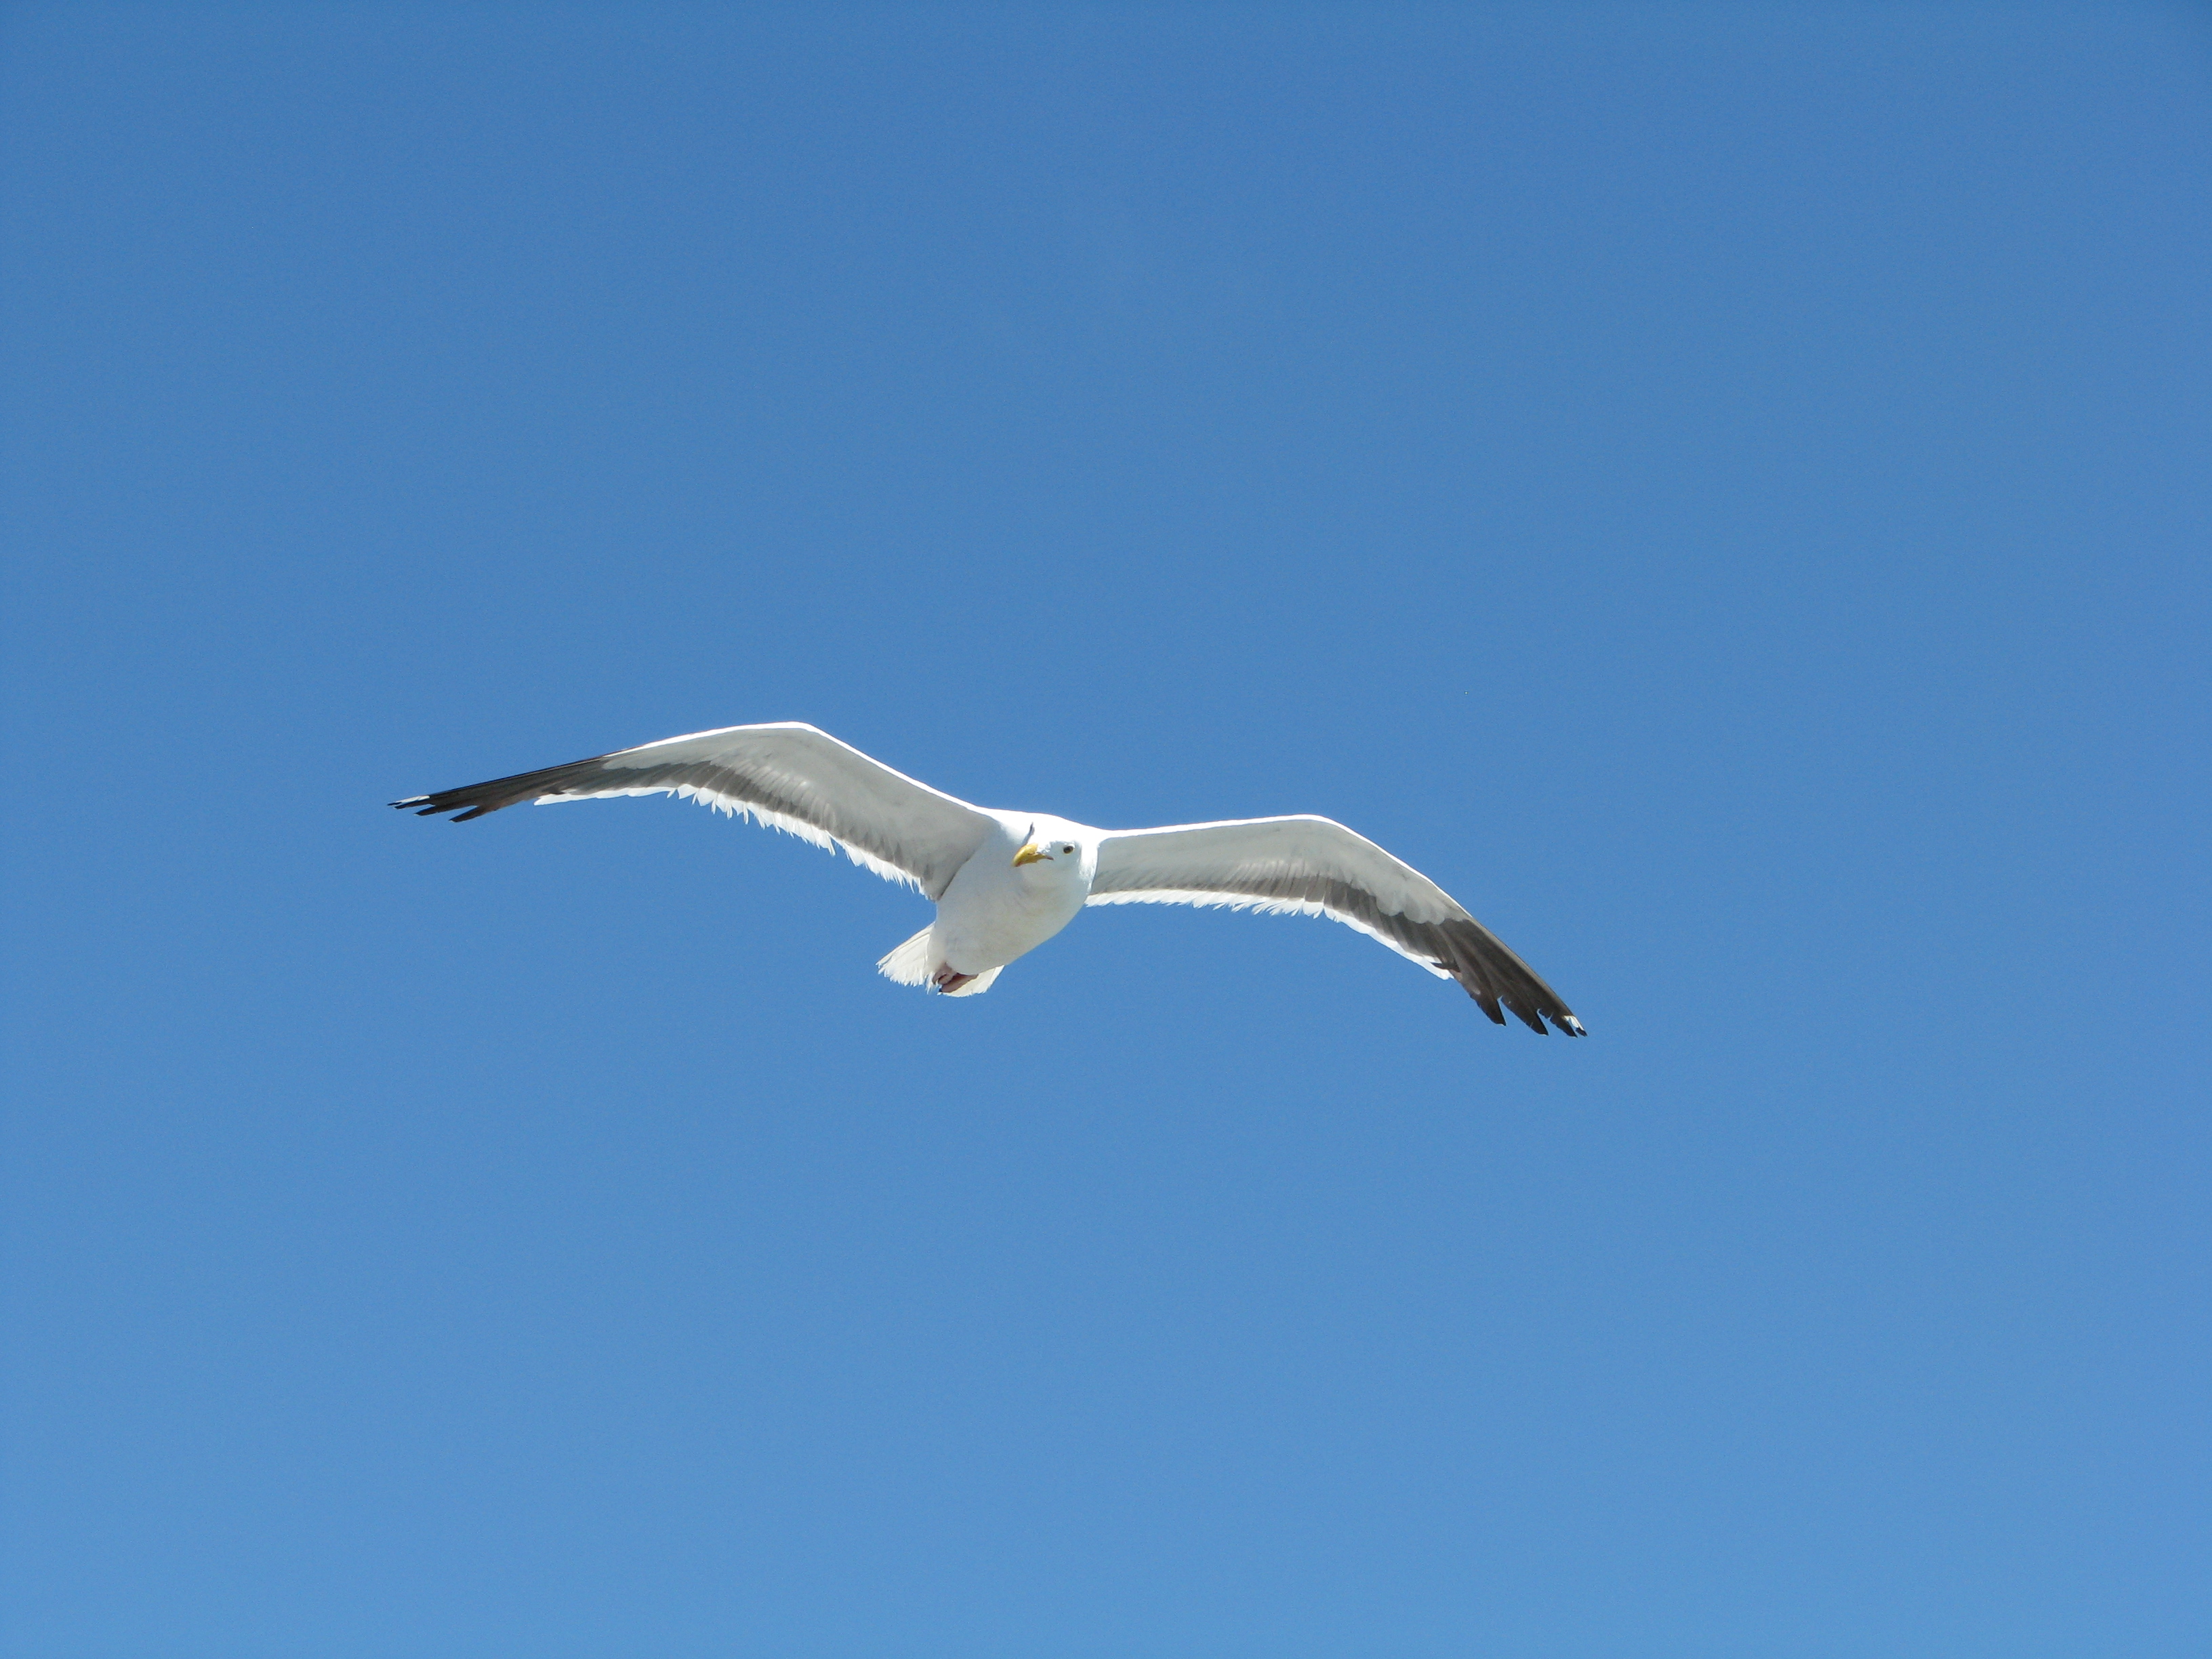 File:Flying Seagull (2704154711).jpg - Wikimedia Commons